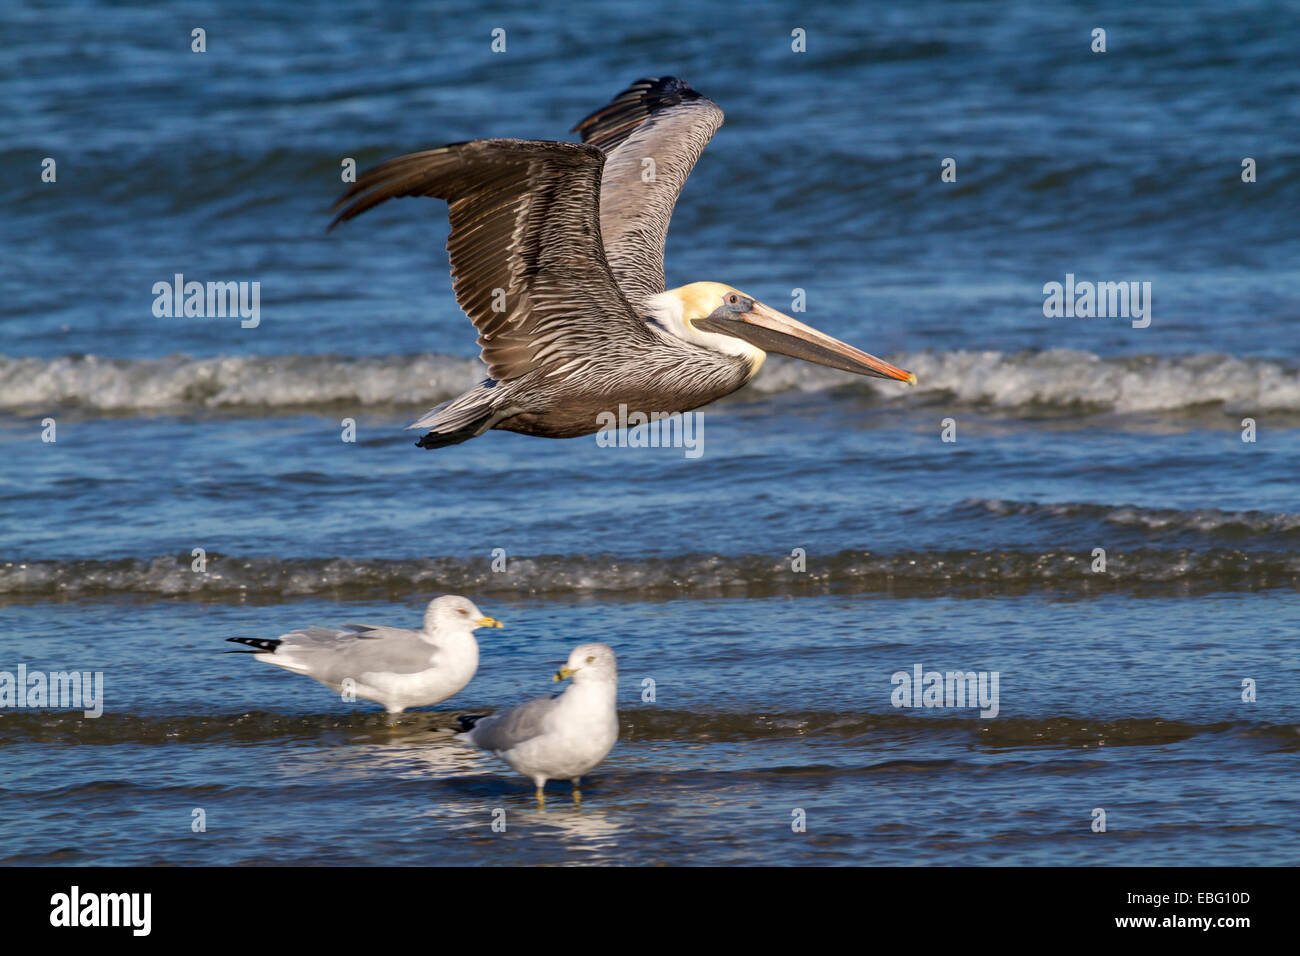 Pélican brun (Pelecanus occidentalis) volant le long de la côte de l'océan, Galveston, Texas, États-Unis. Banque D'Images